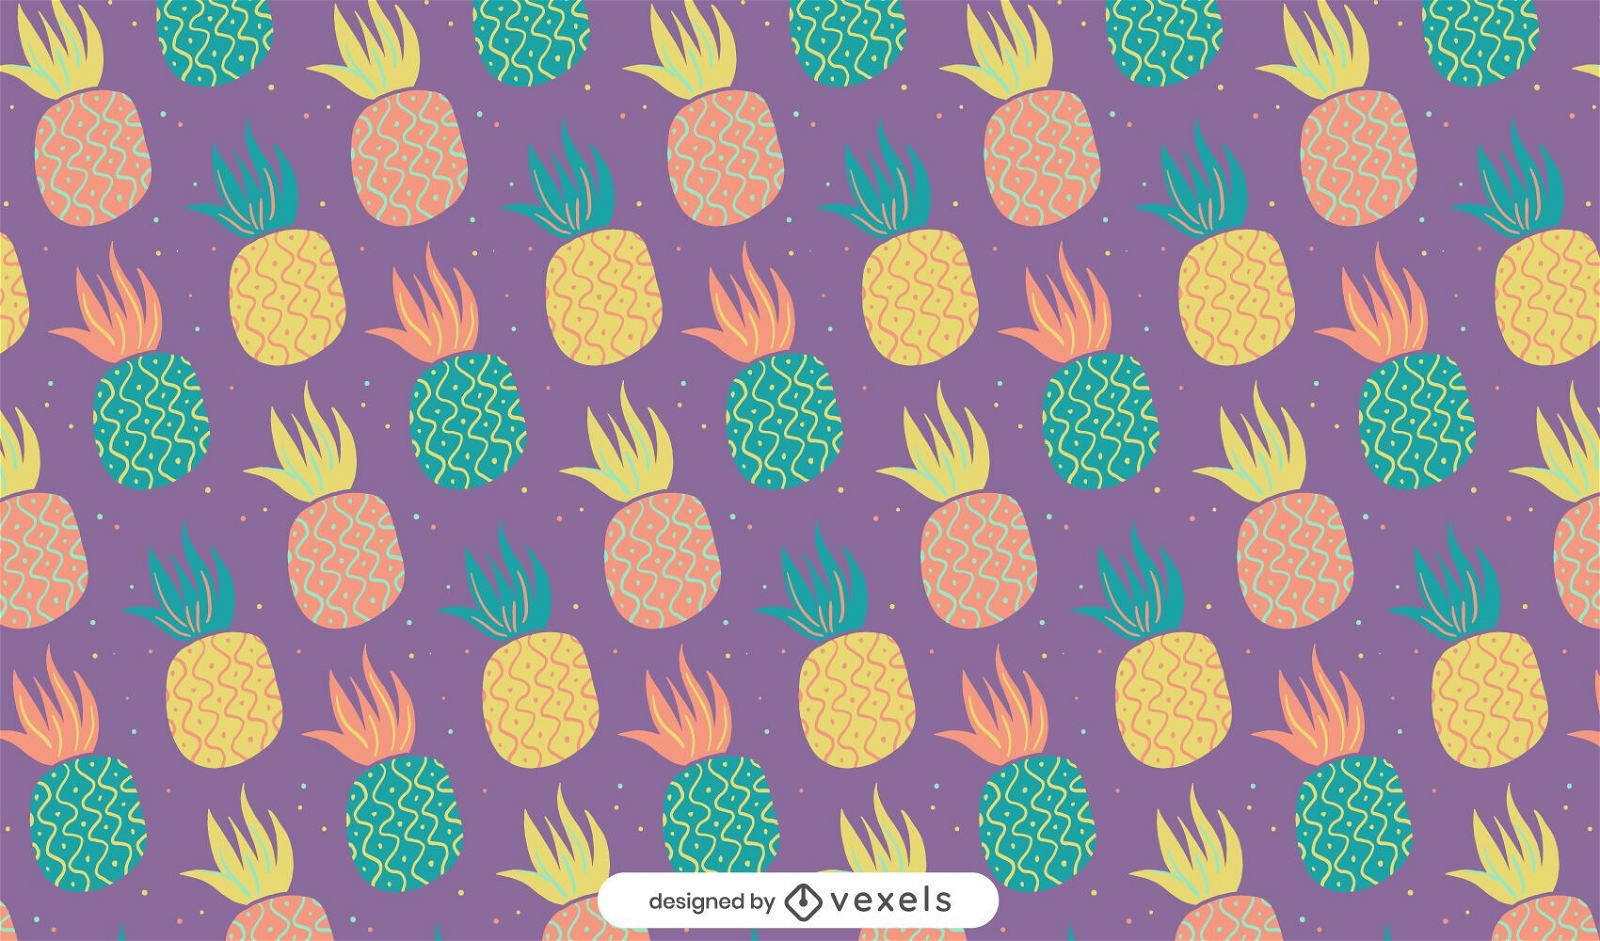 Doodle pineapples pattern design